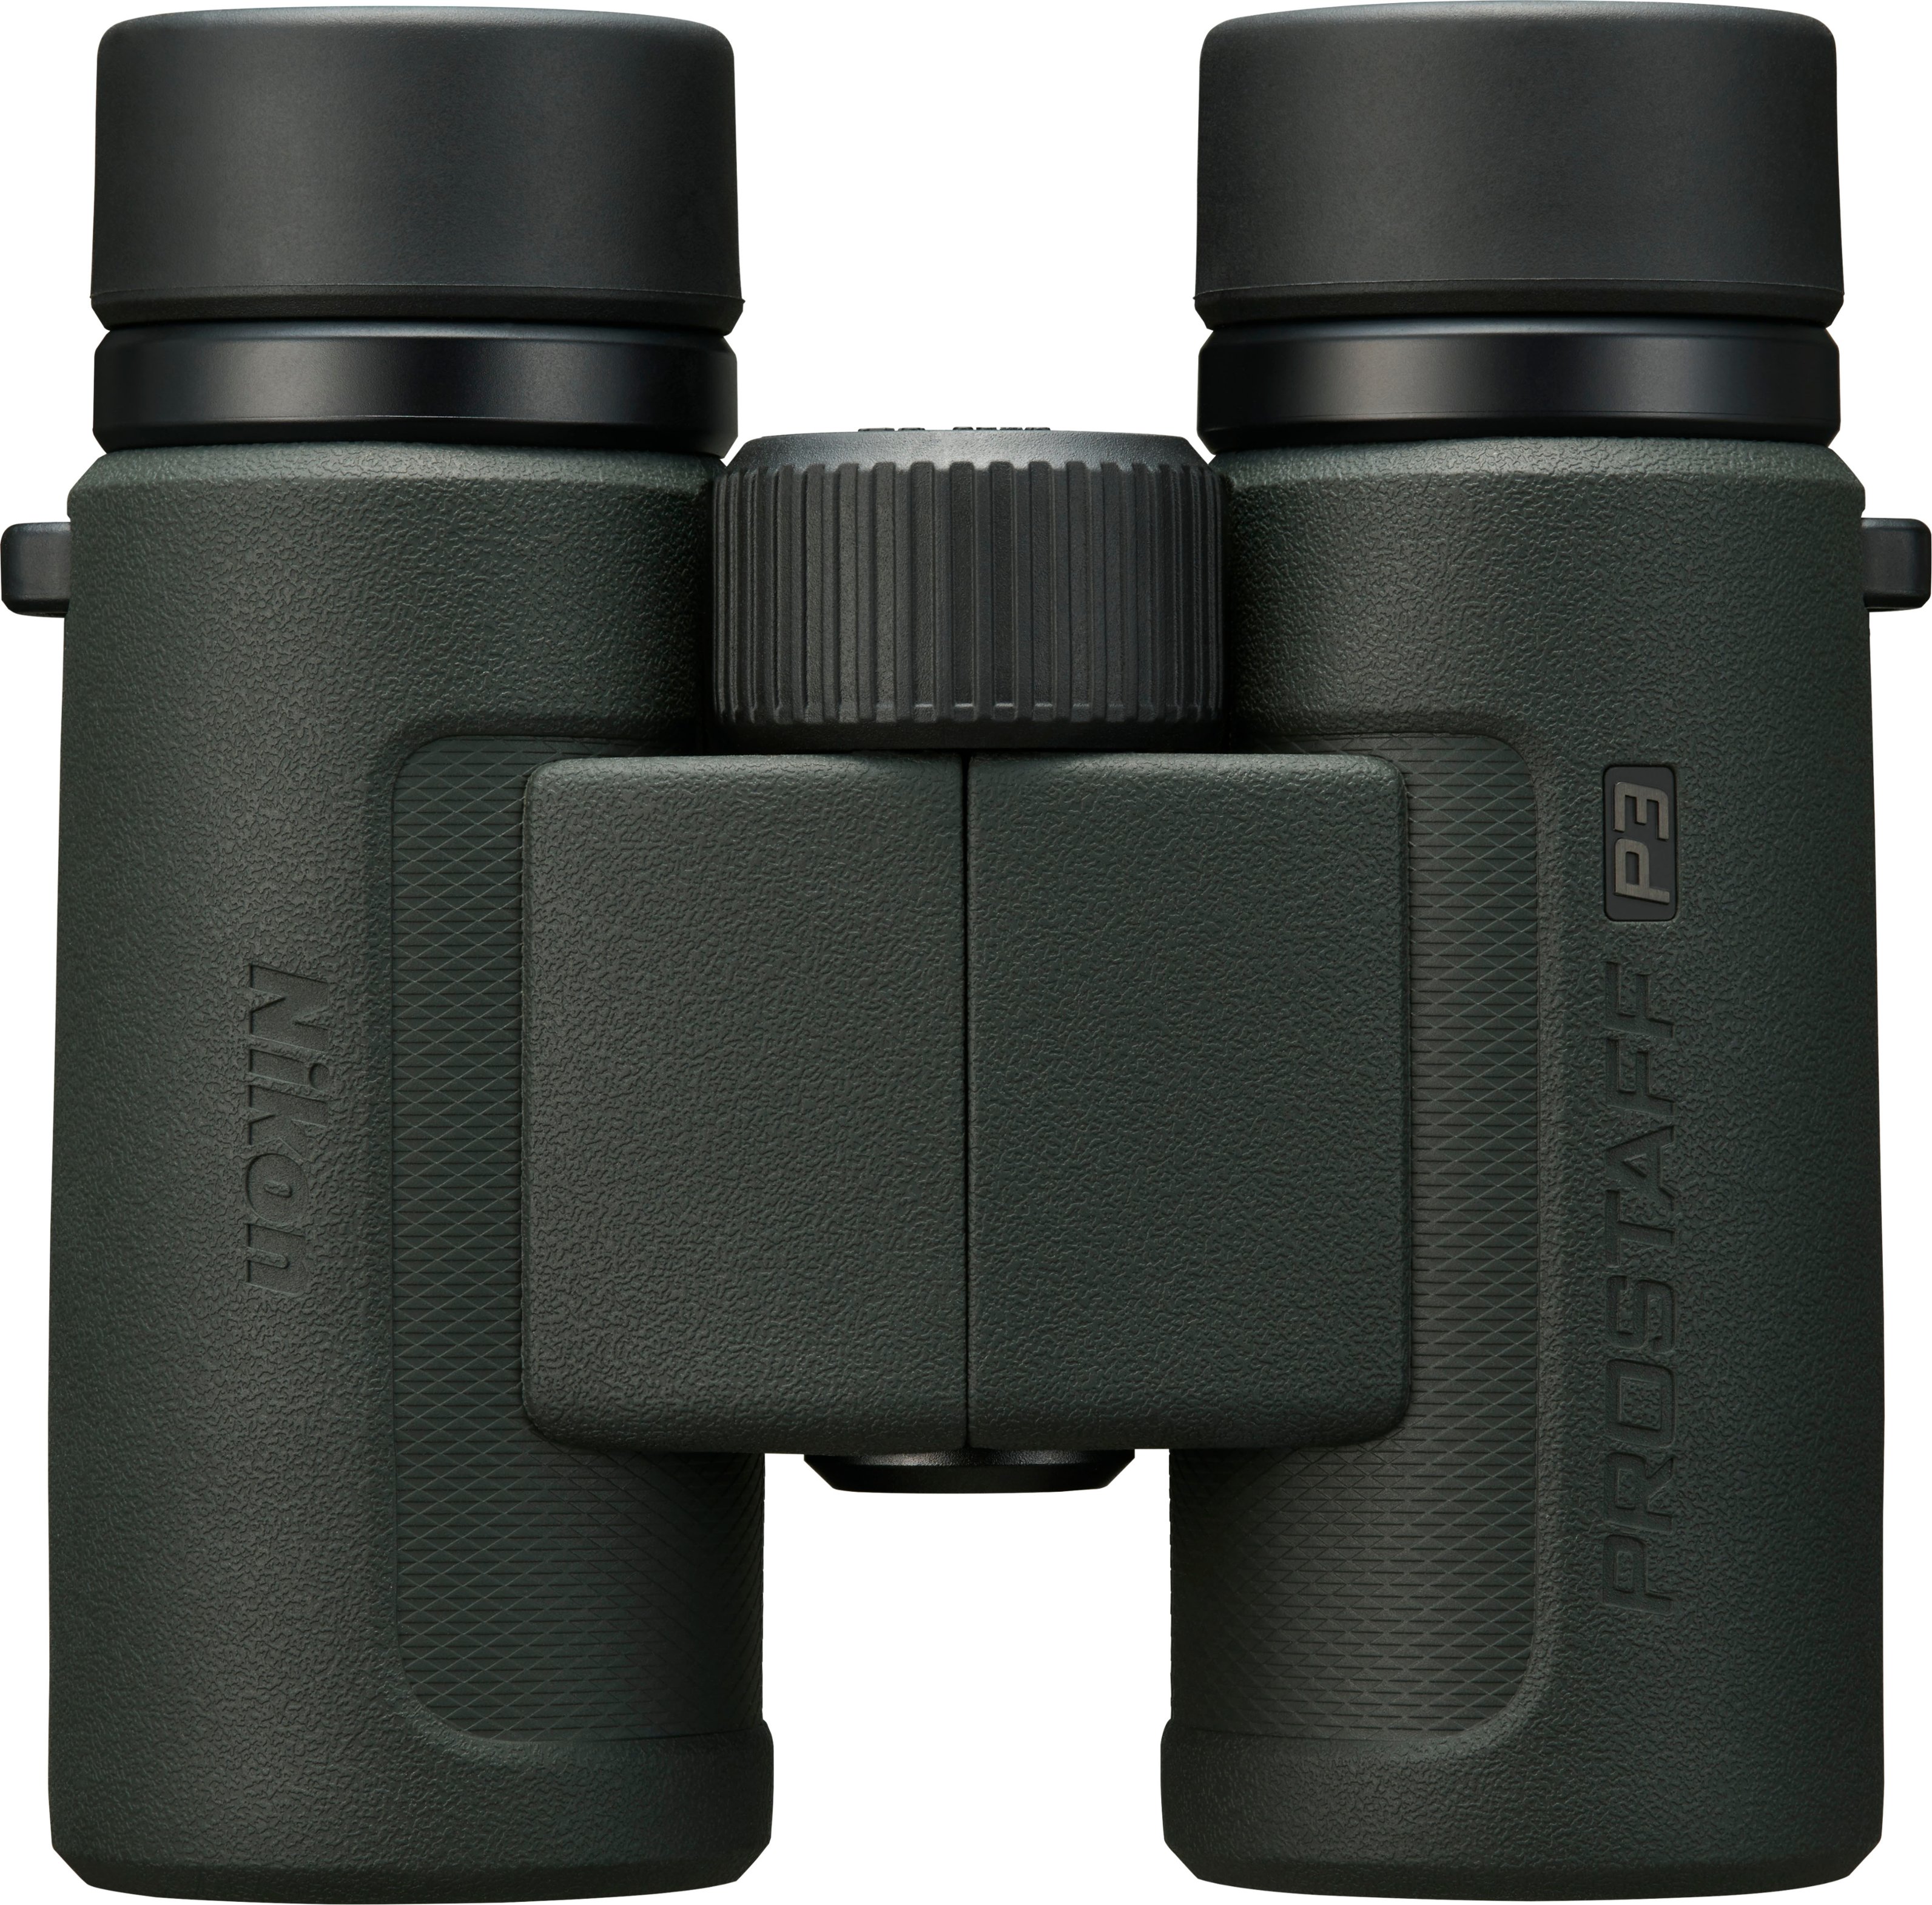 Angle View: Nikon - PROSTAFF P3 8X30 Waterproof Binoculars - Green